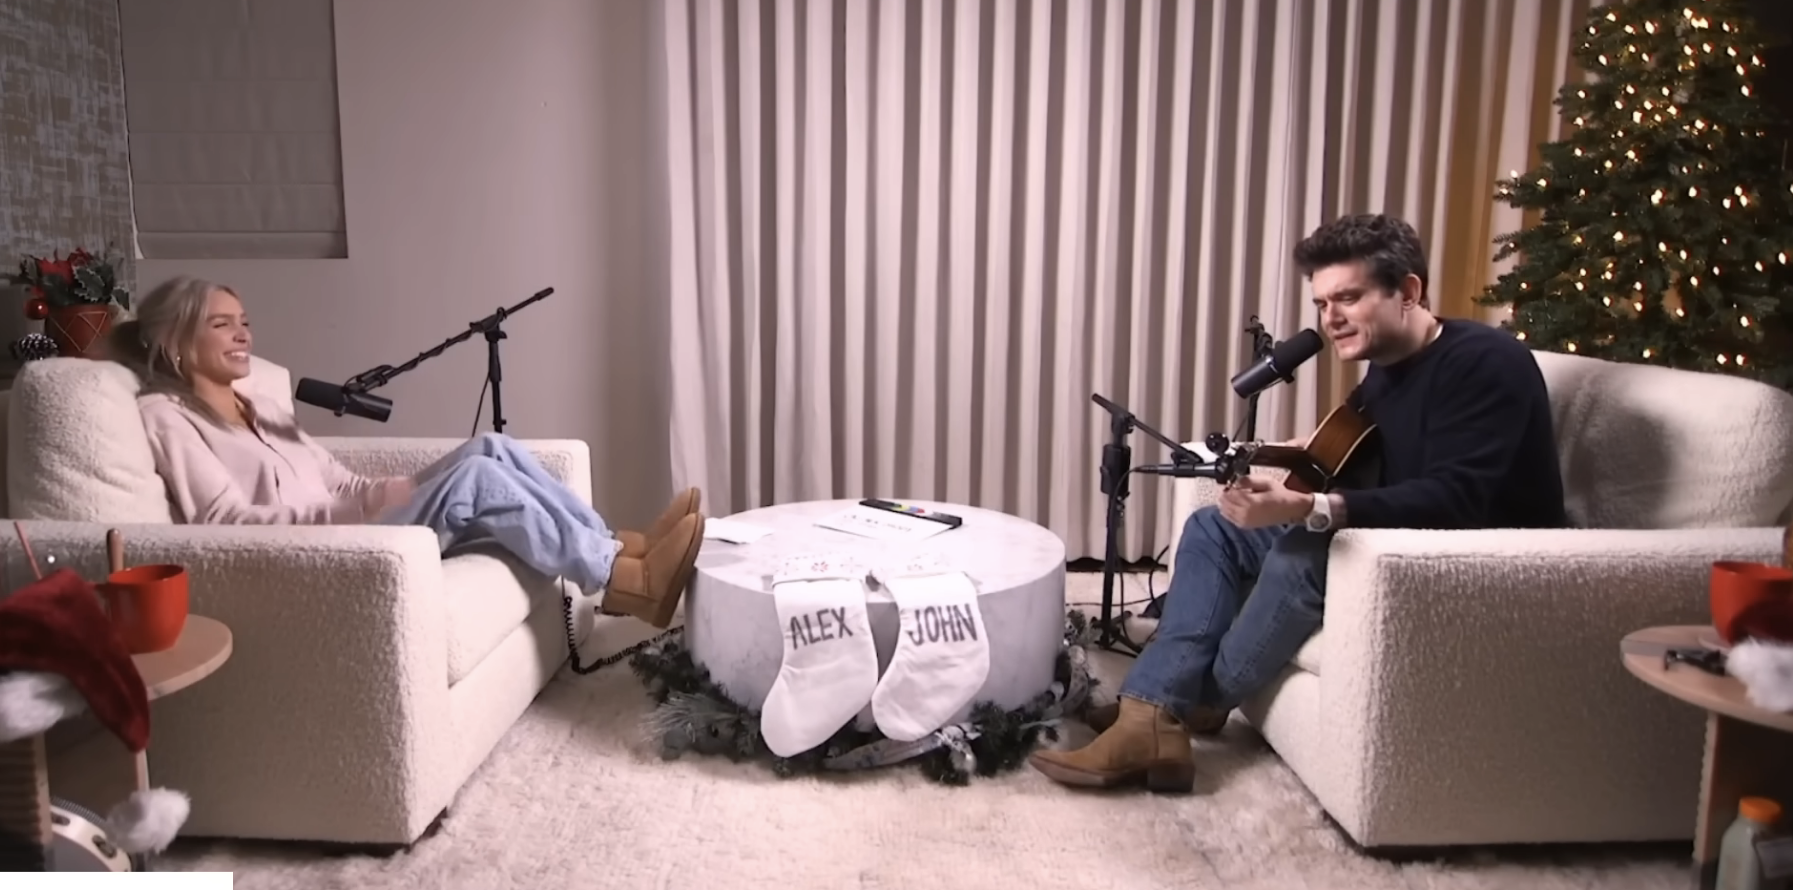 John Mayer playing guitar and singing to someone